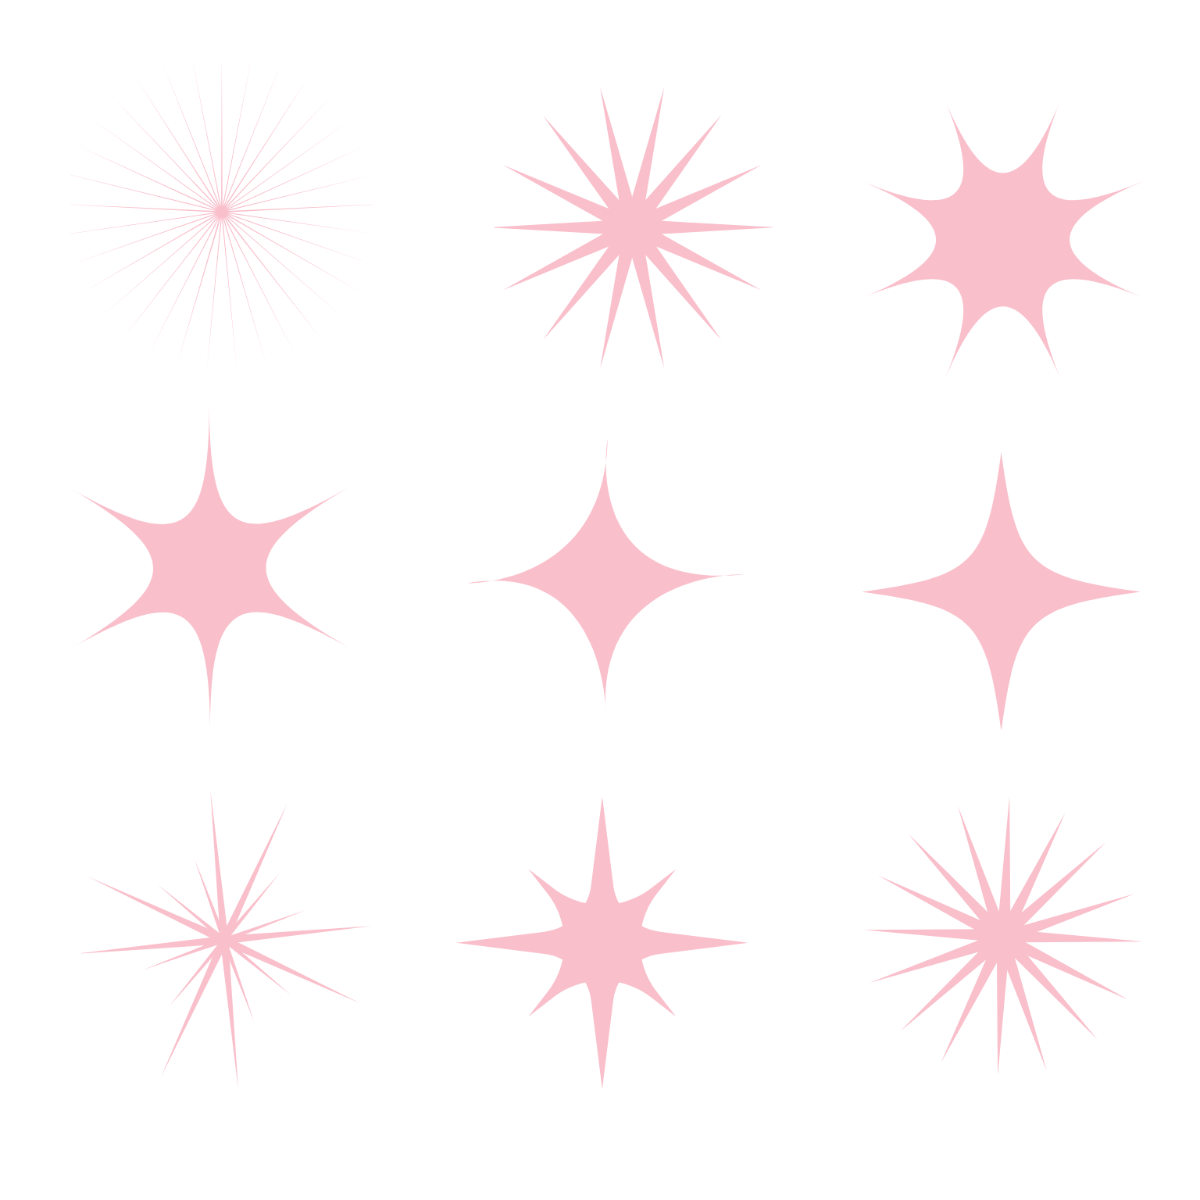 https://images.template.net/200113/free-pink-sparkle-vector-edit-online.jpg